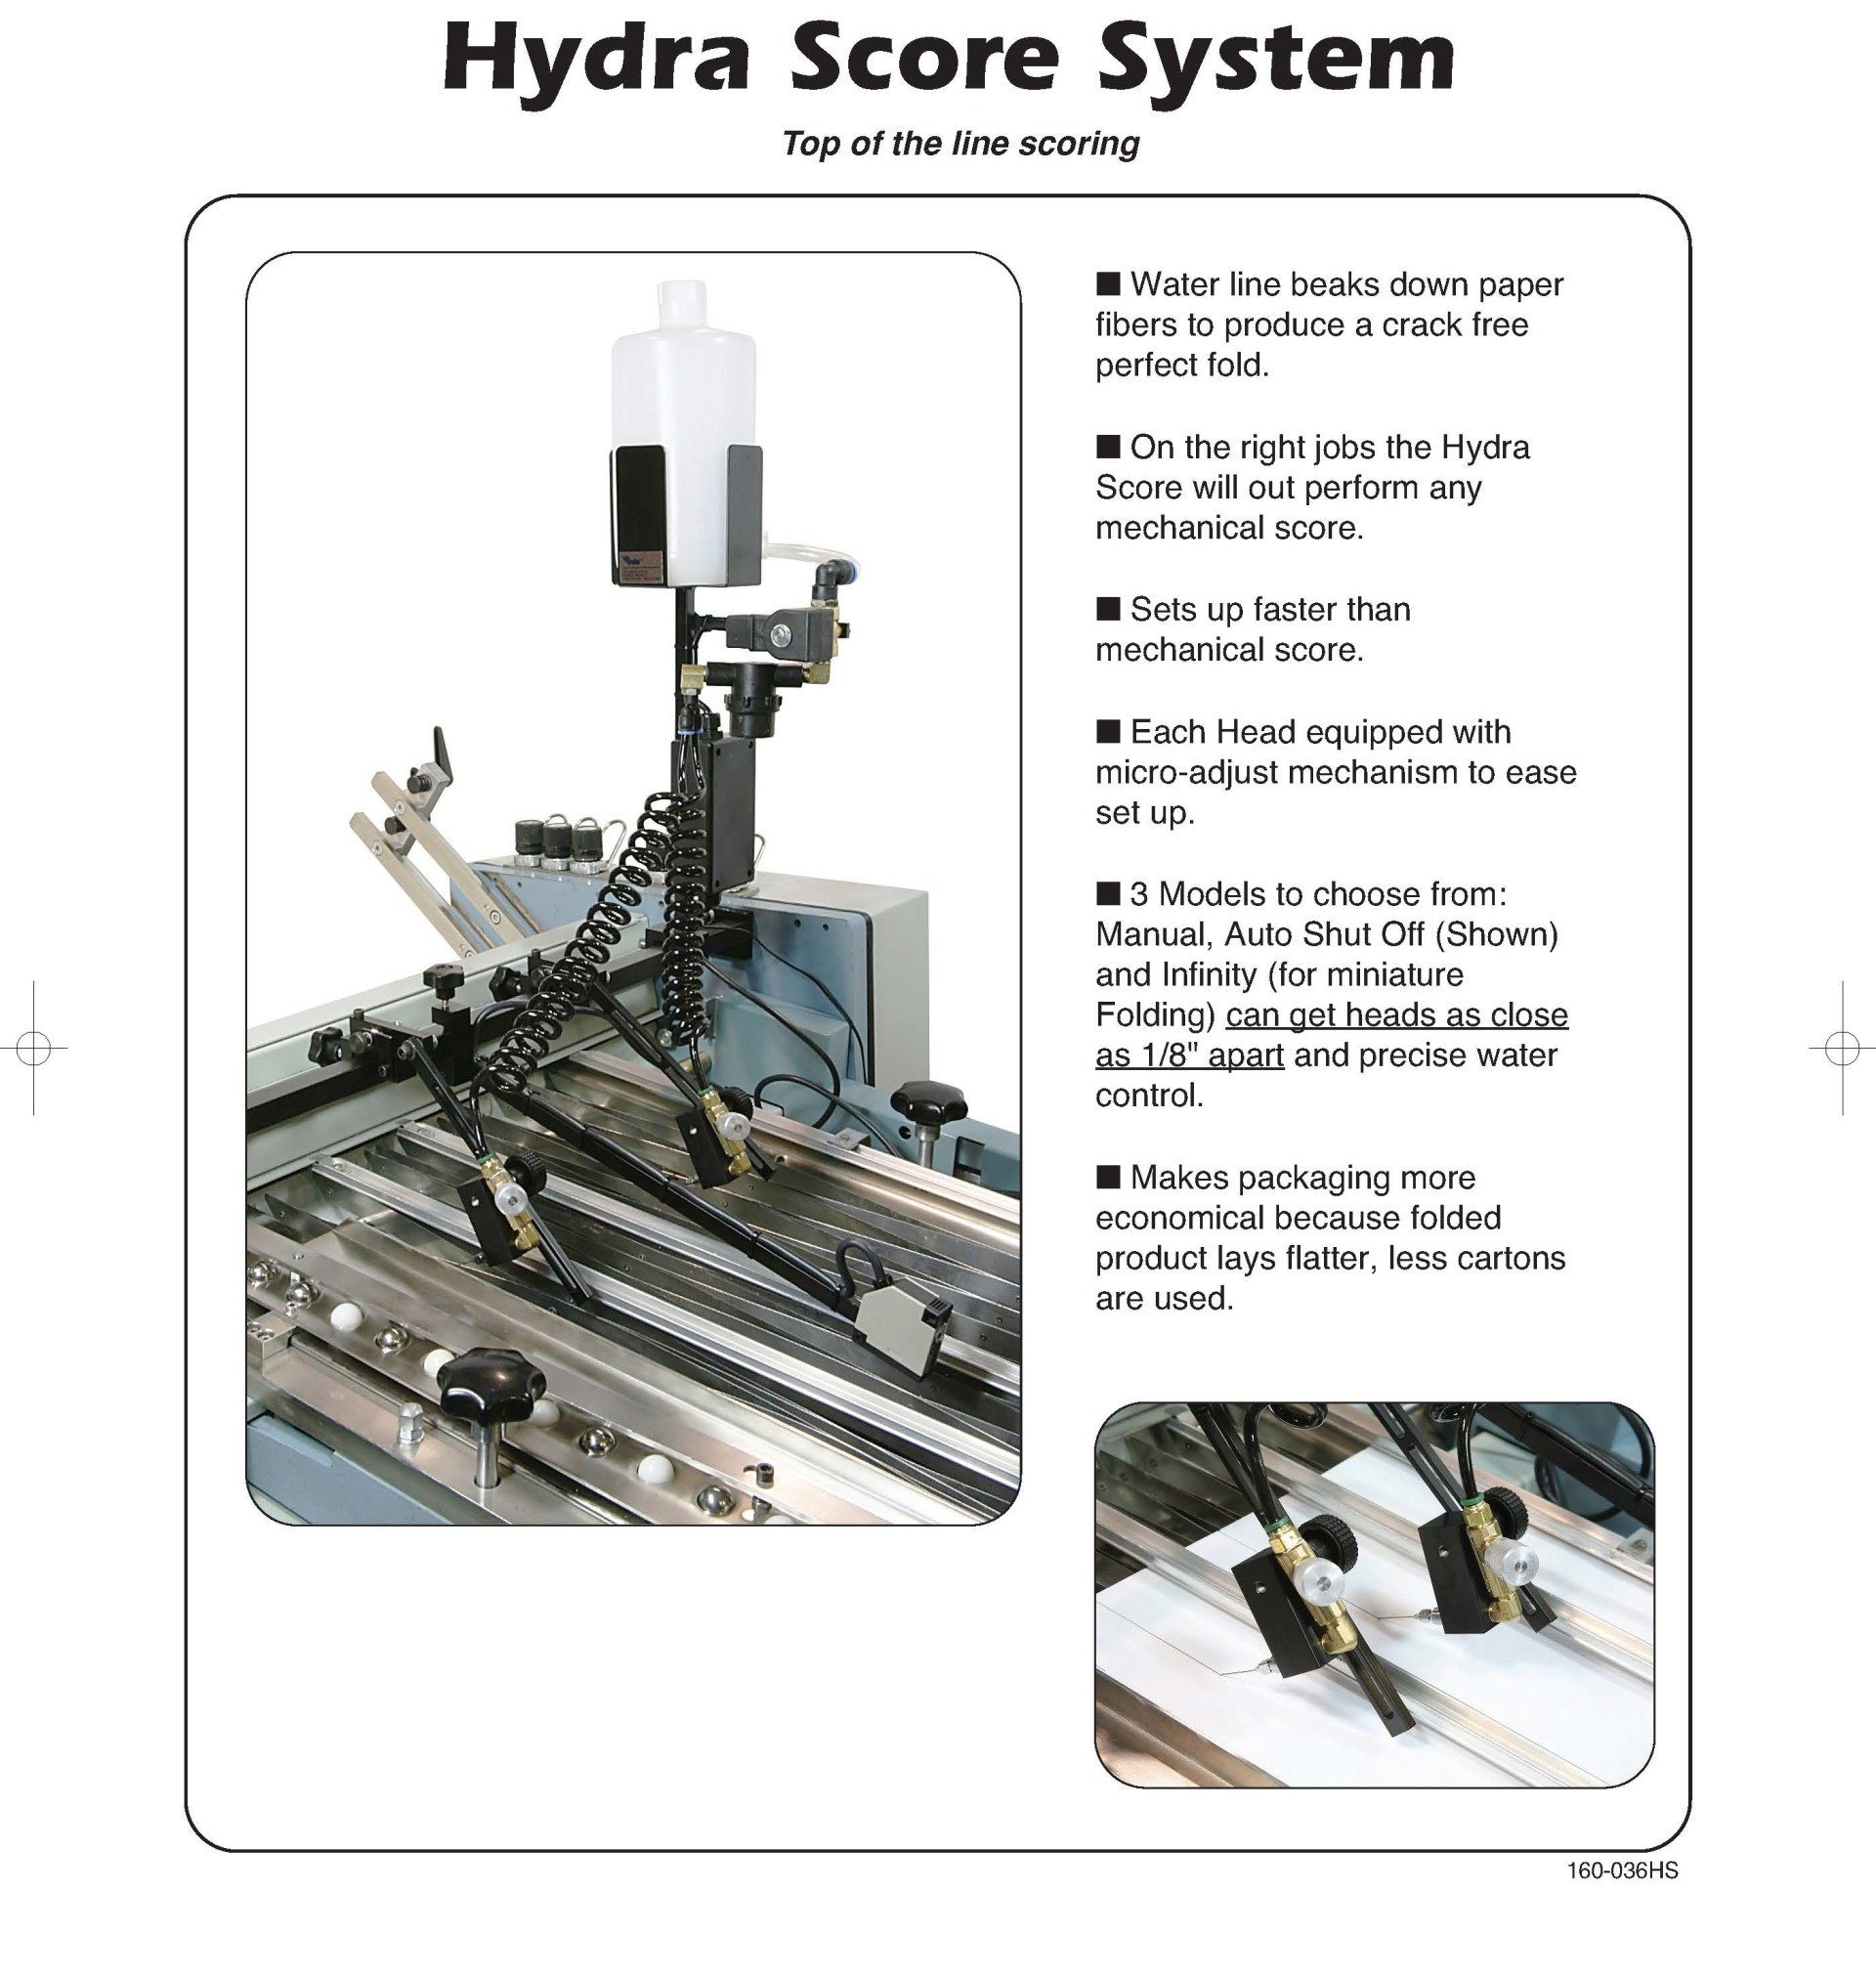 Information on Hydra Score System